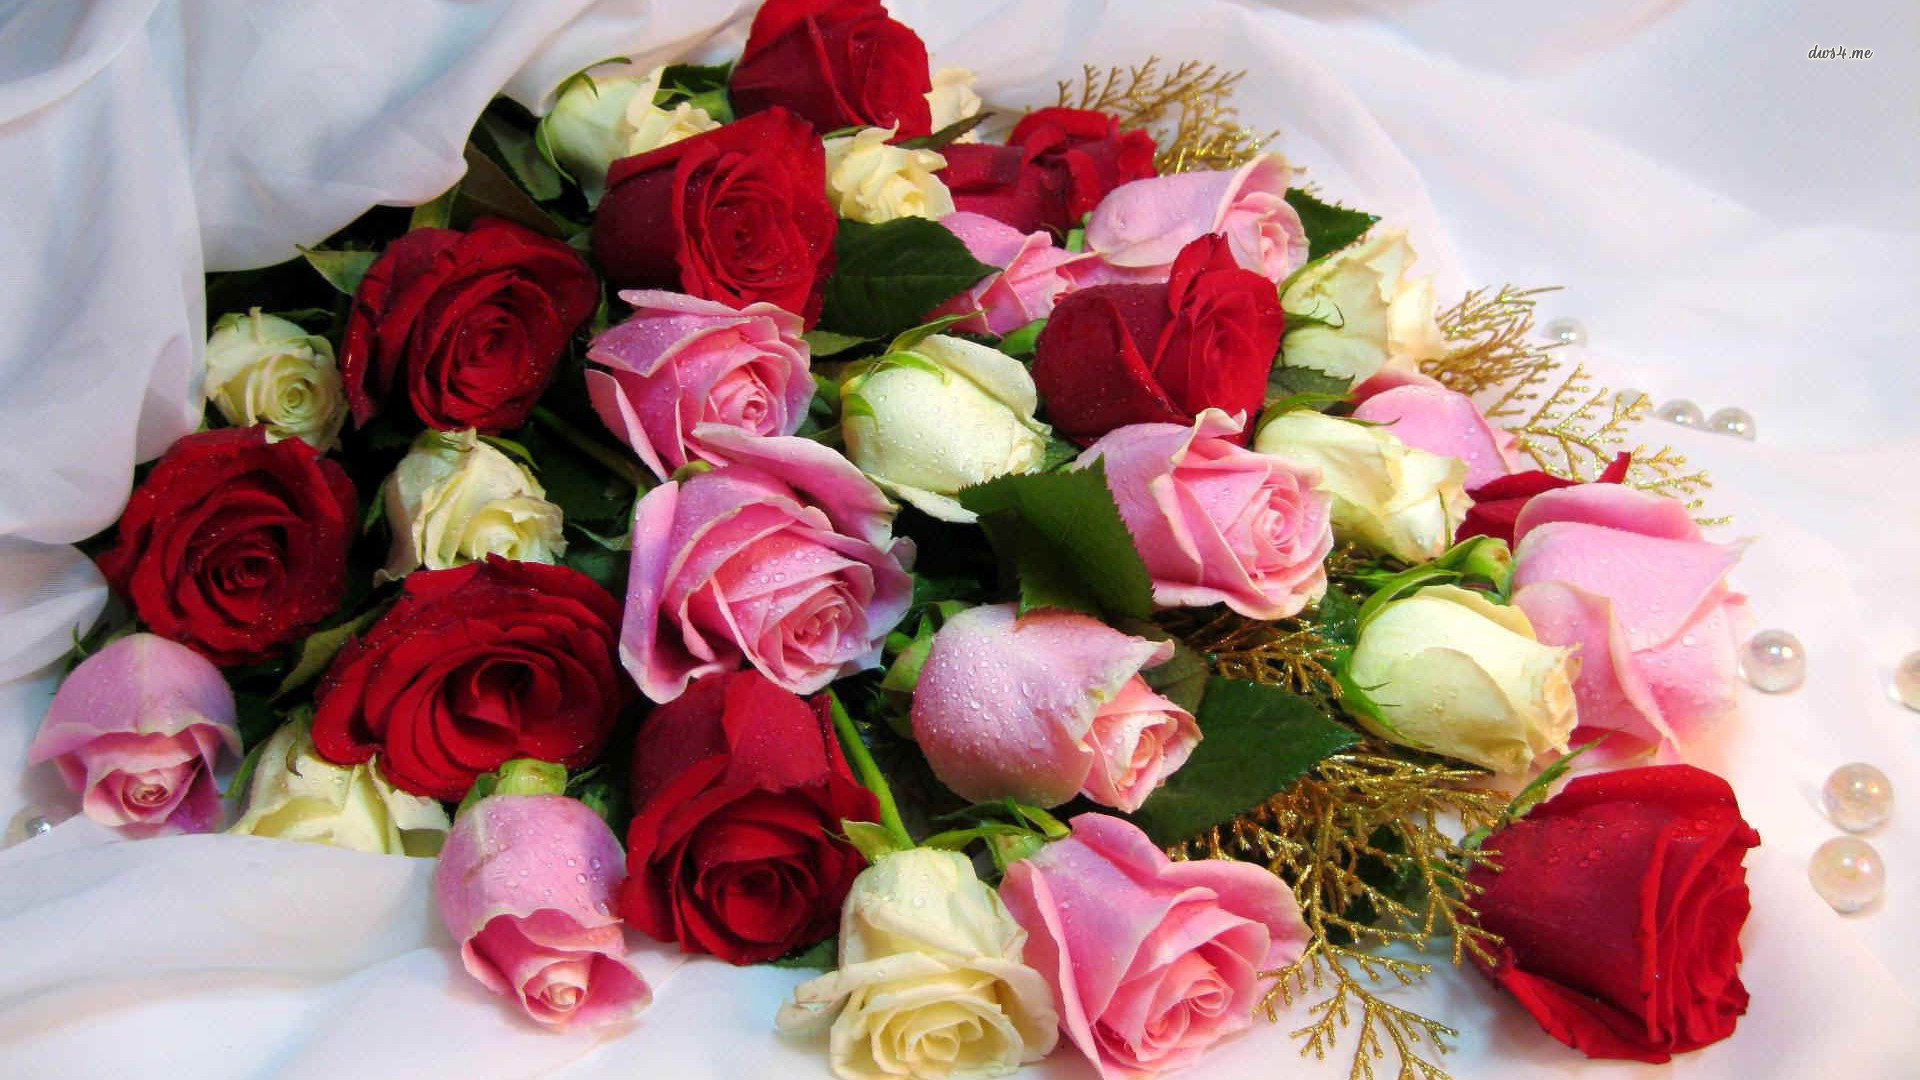 12330-bouquet-of-roses-1920x1080-flower-wallpaper.jpg